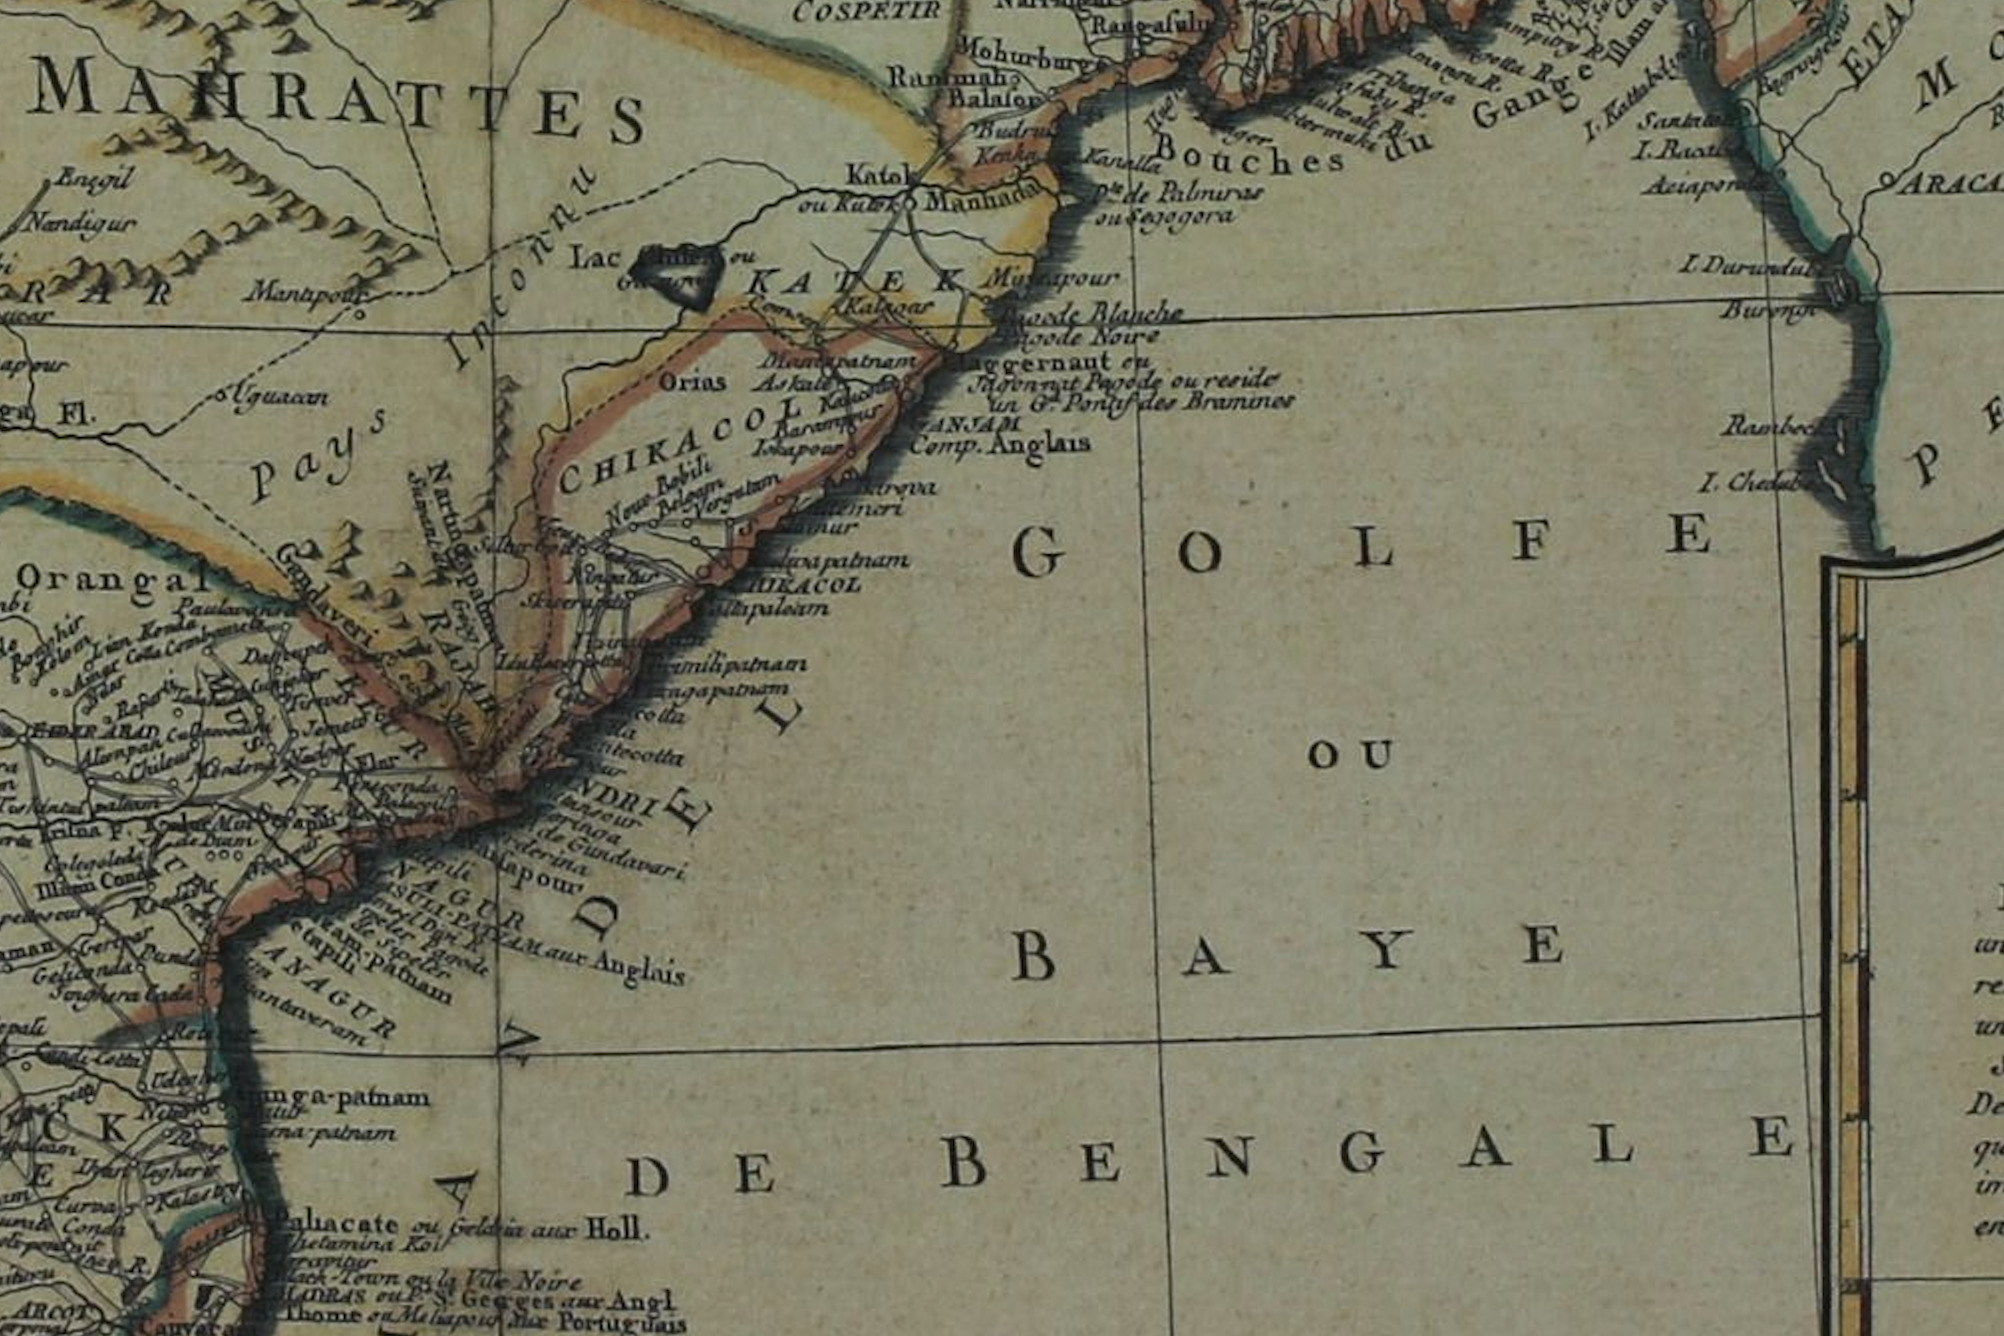 Gateways to India - Bharuch, Cholas, Dutch East India Company, featured, French East India Company, Goa, Gujarat, Jagannath, Kochi, Maritime history, Mughals, Muziris, Portuguese, Sea, Sea of Stories